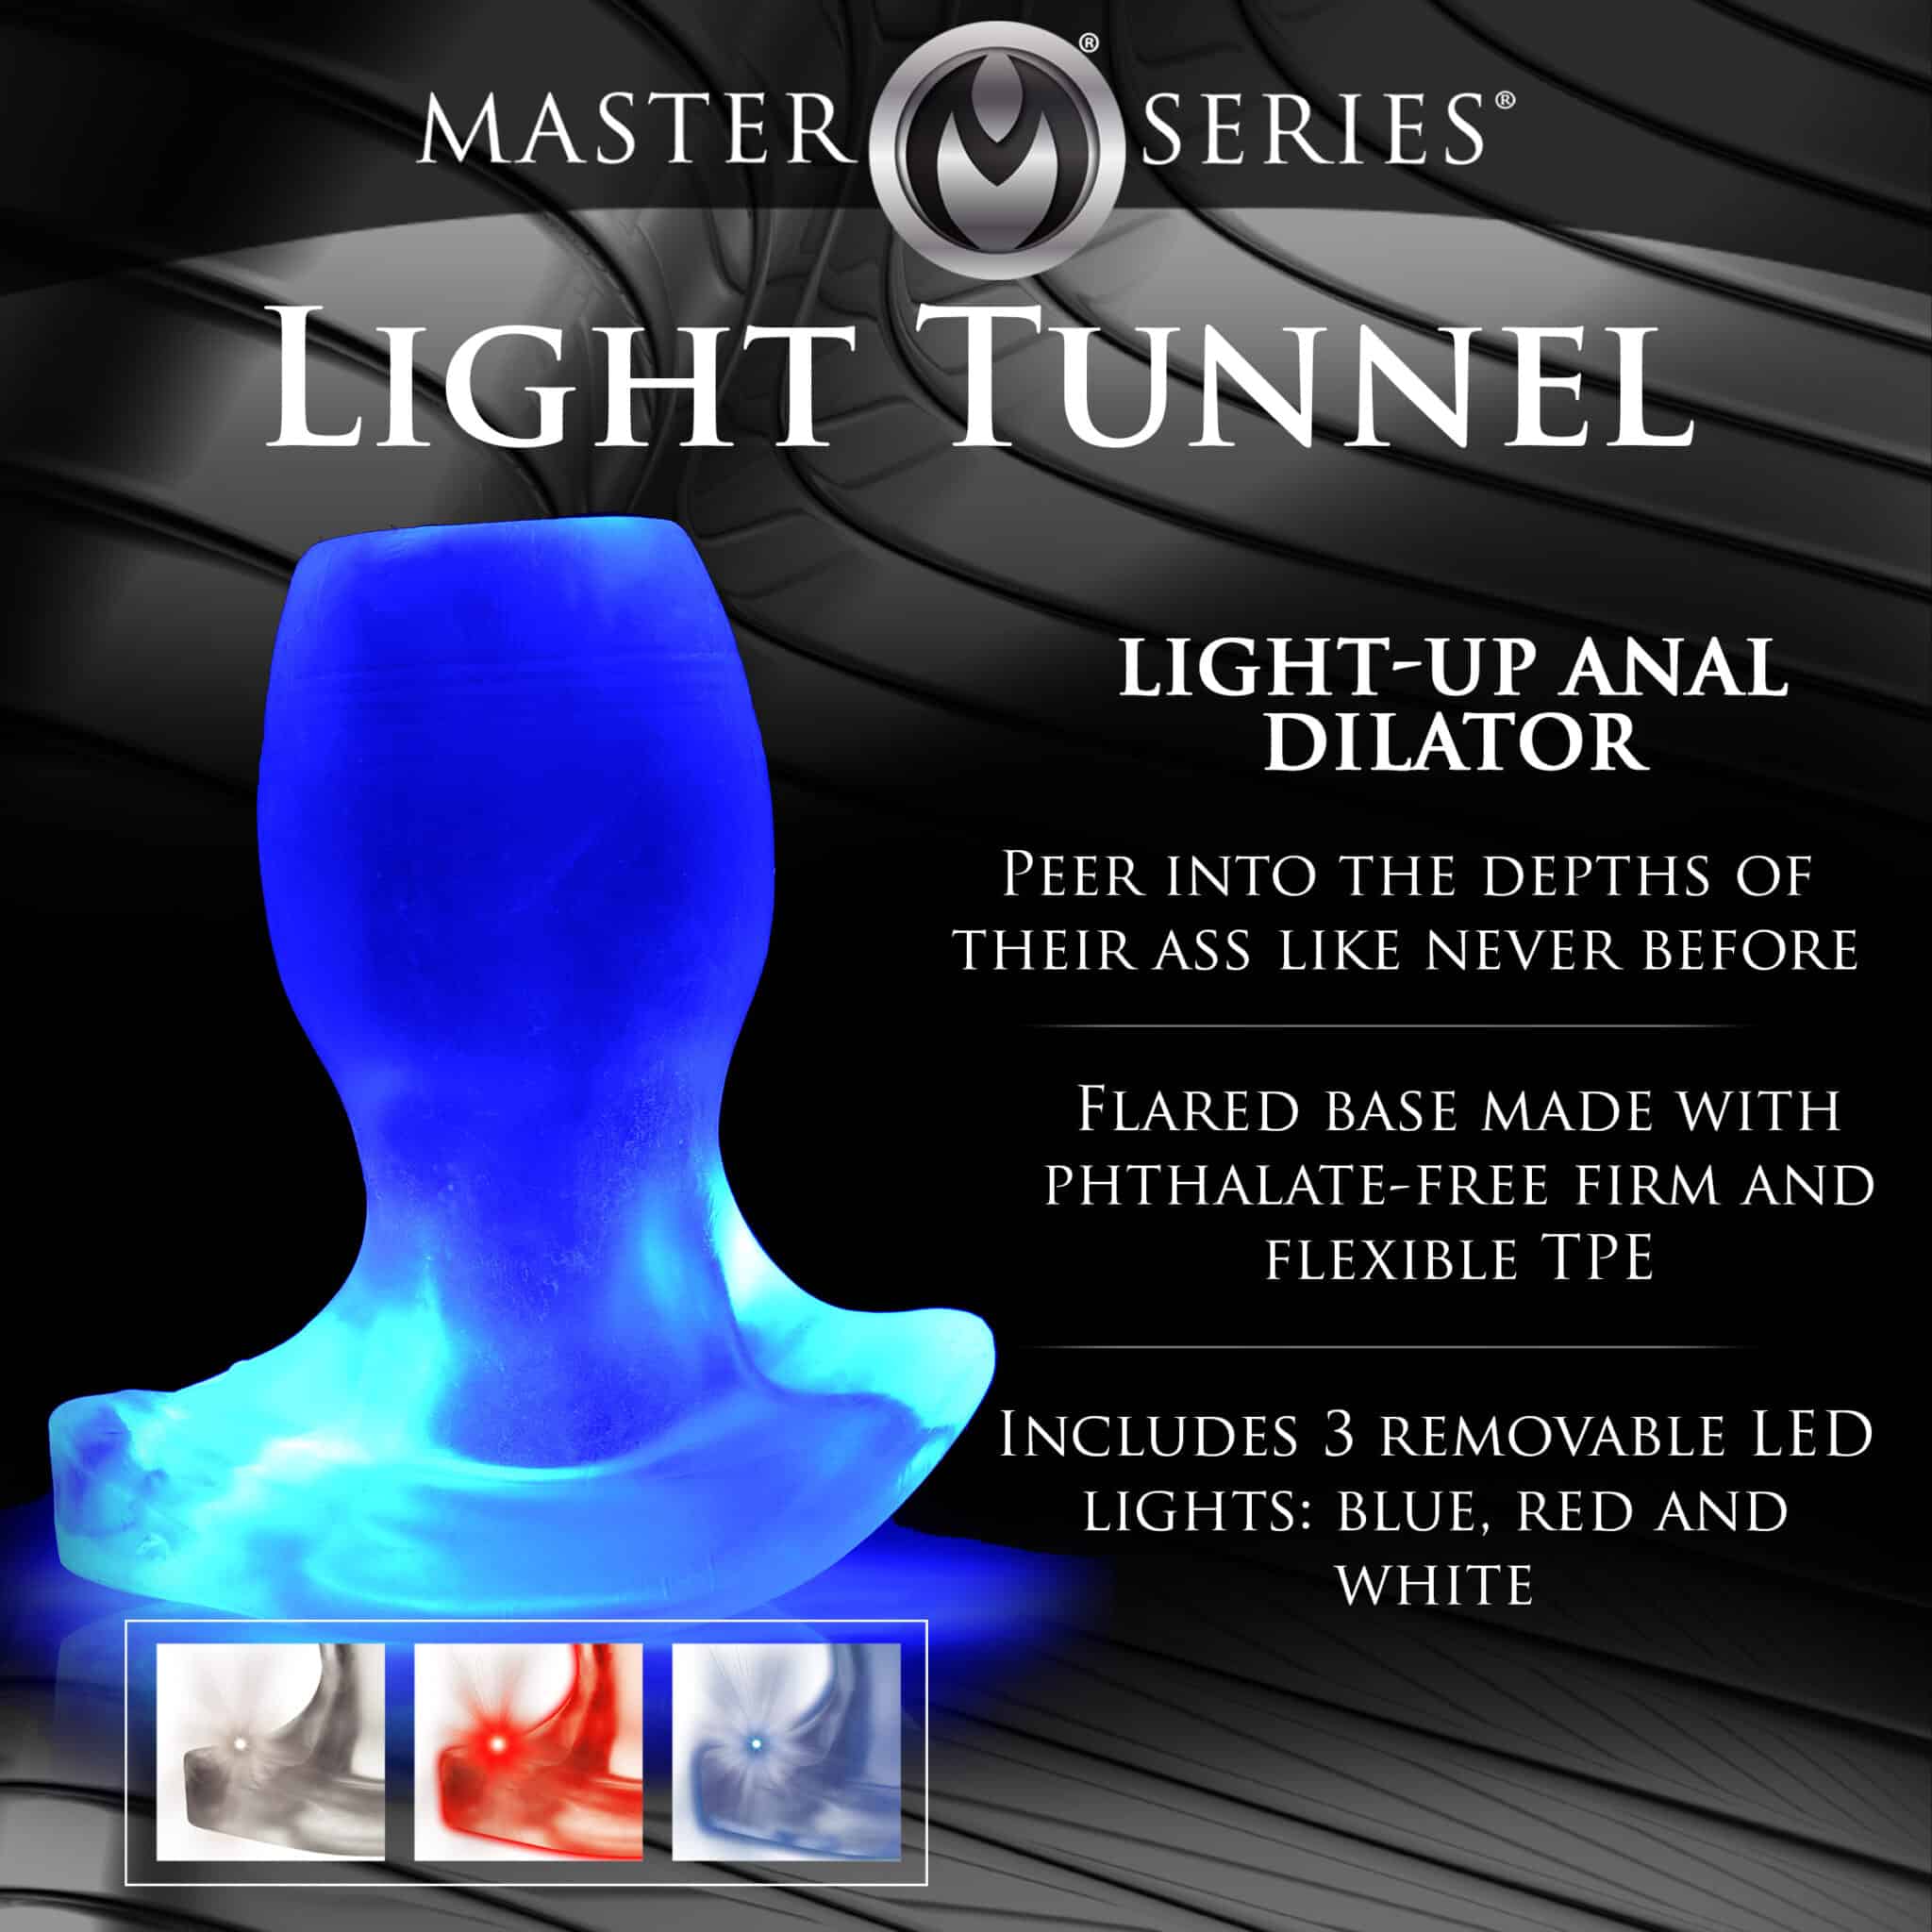 Light-Tunnel Light-Up Anal Dilator – Large